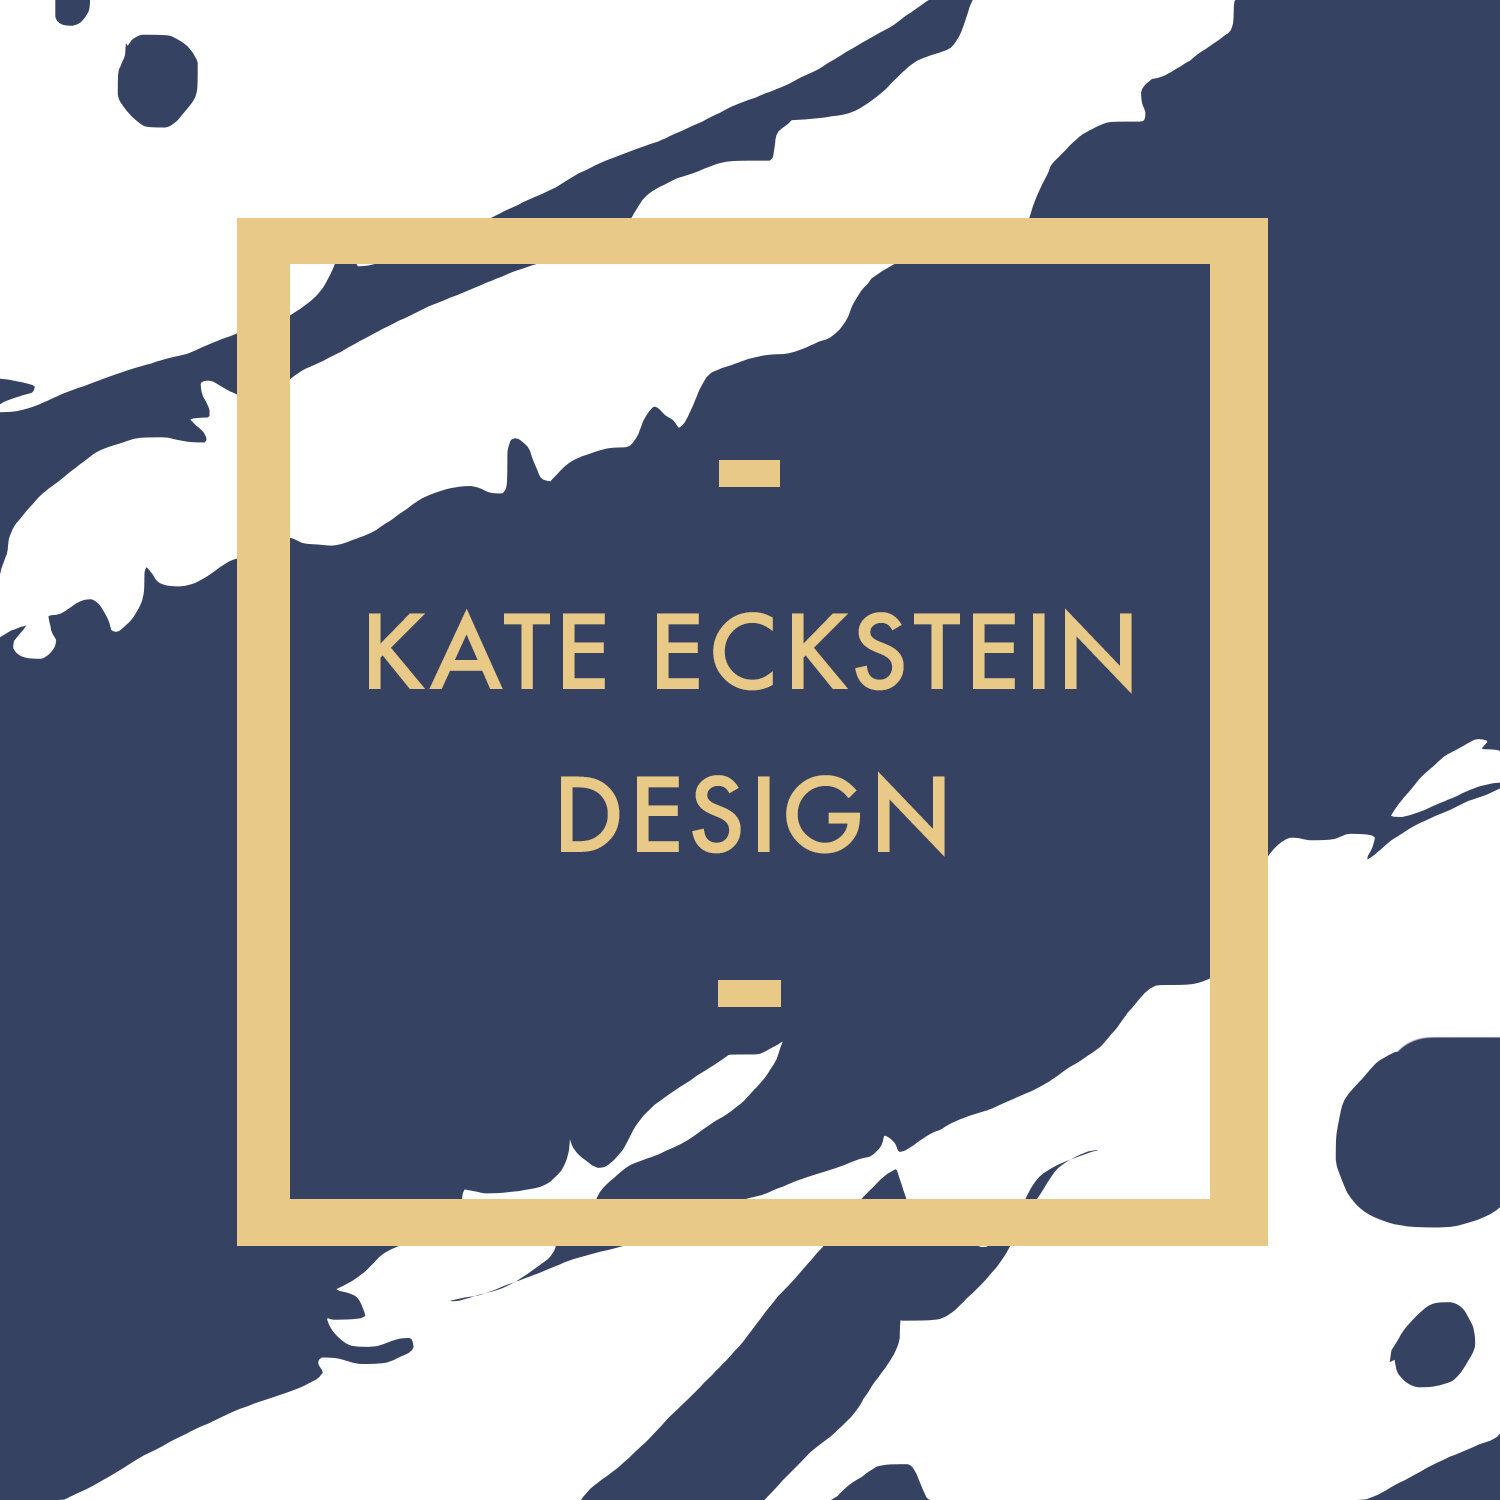 5 star testimonial from Kate Eckstein Design. Kate employs 4Dbiz for Executive Support, Administrative support, design support, and marketing support for interior designers